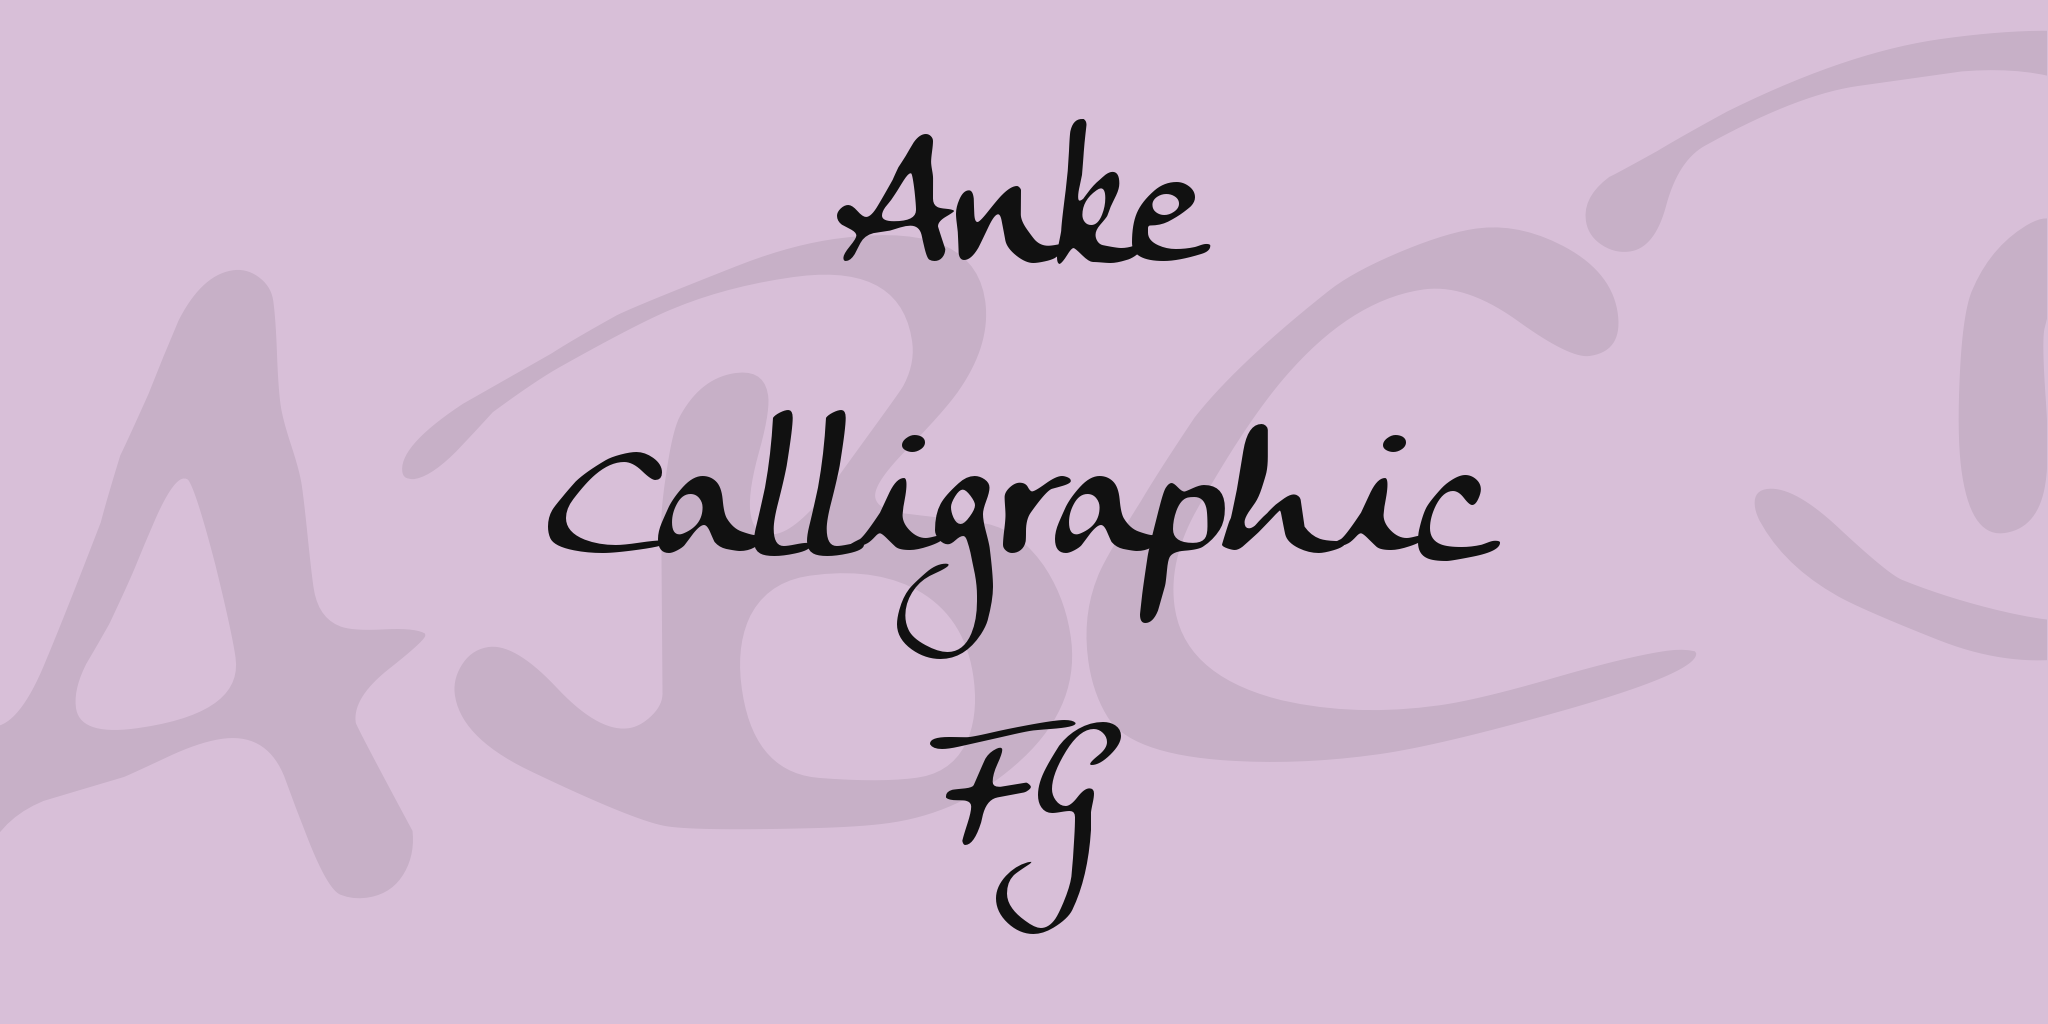 Anke Calligraphic Fg